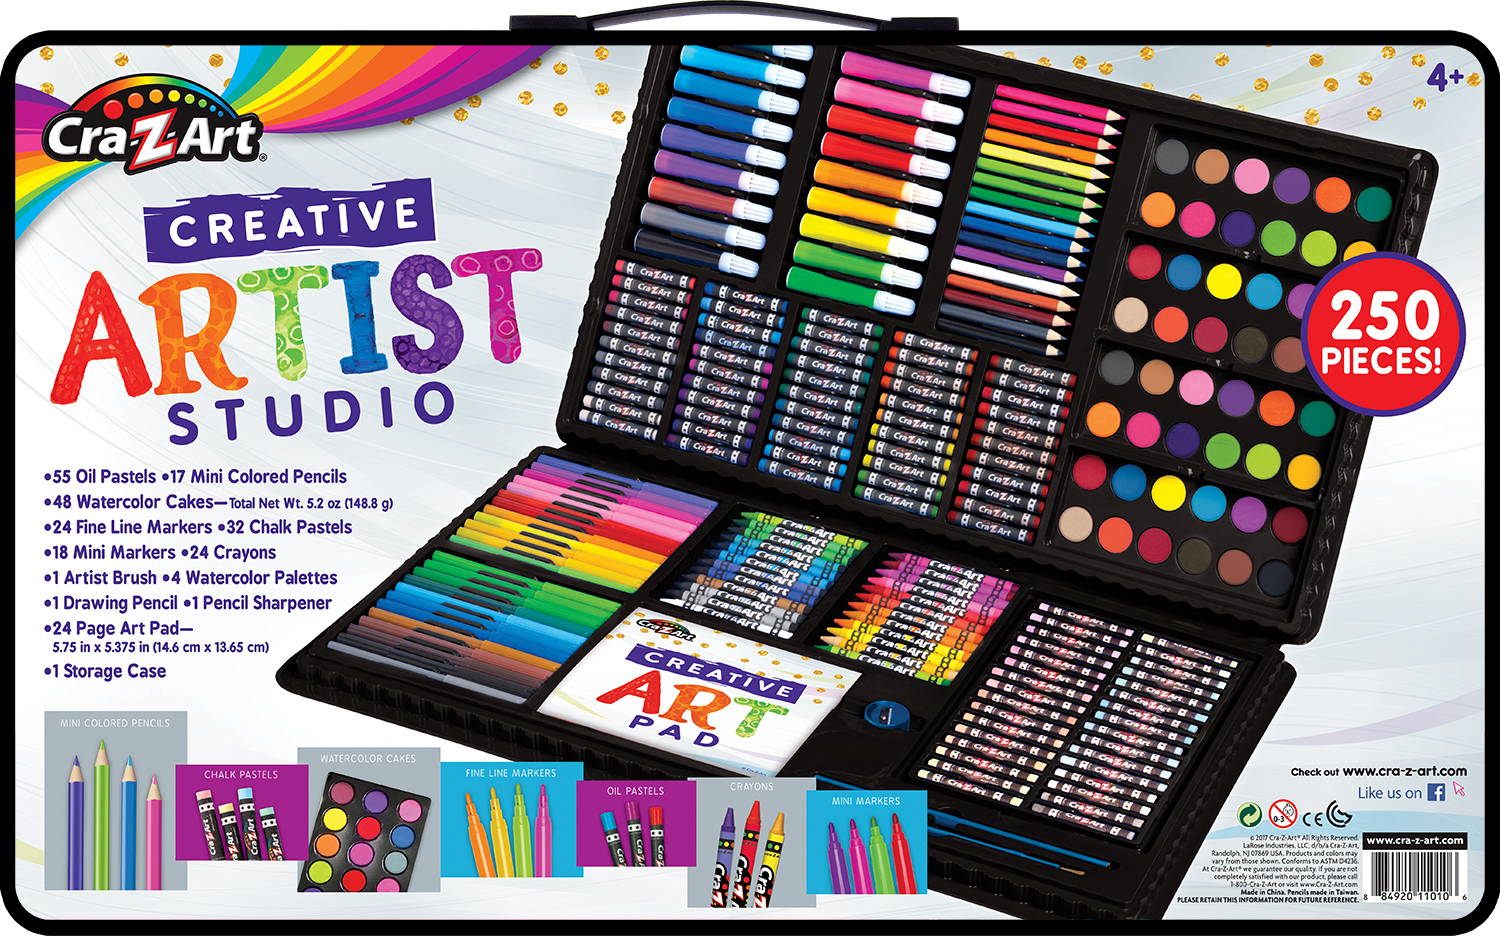 Cra-Z-Art Creative Artist Studio, 250 pieces - image 1 of 9